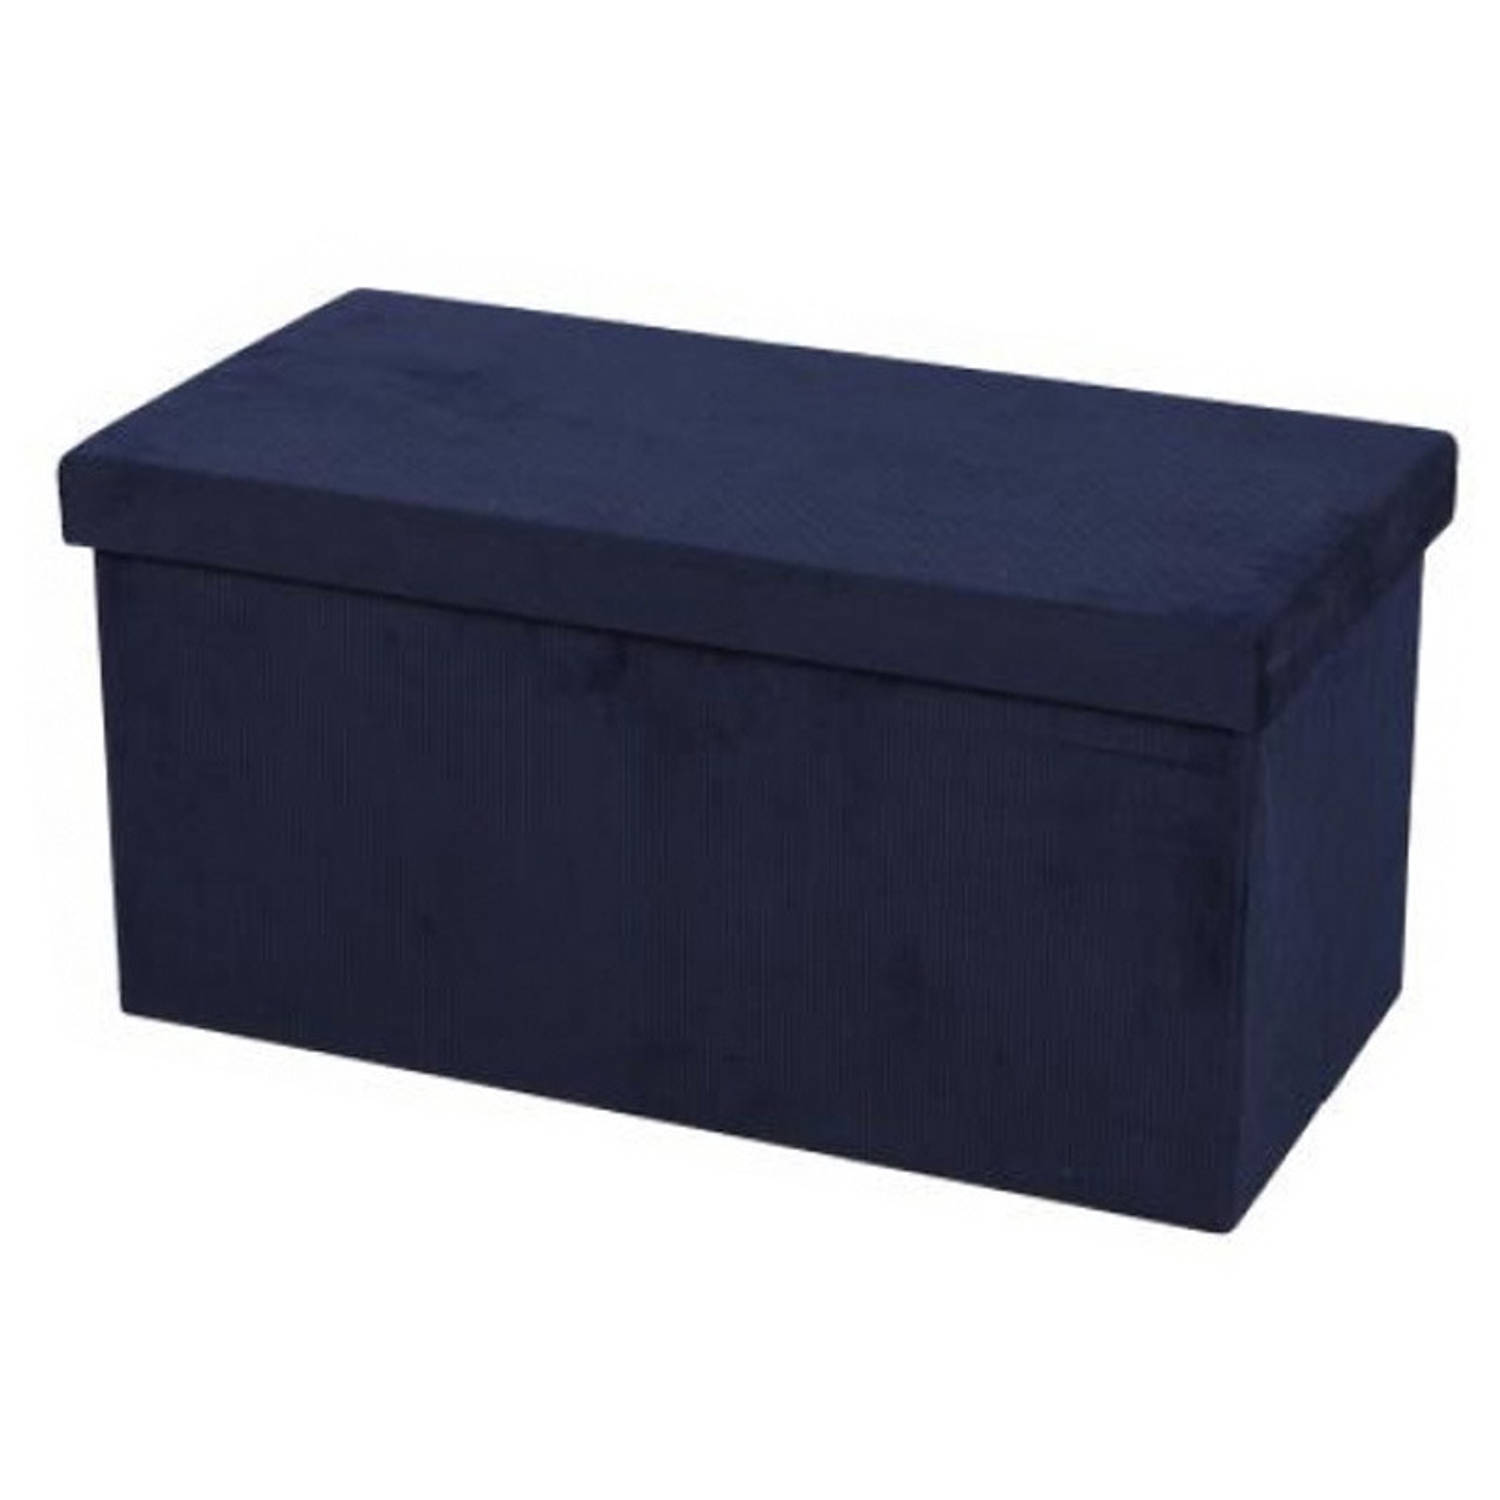 Hocker bank poef XXL opbergbox donkerblauw polyester-mdf 76 x 38 x 38 cm Poefs